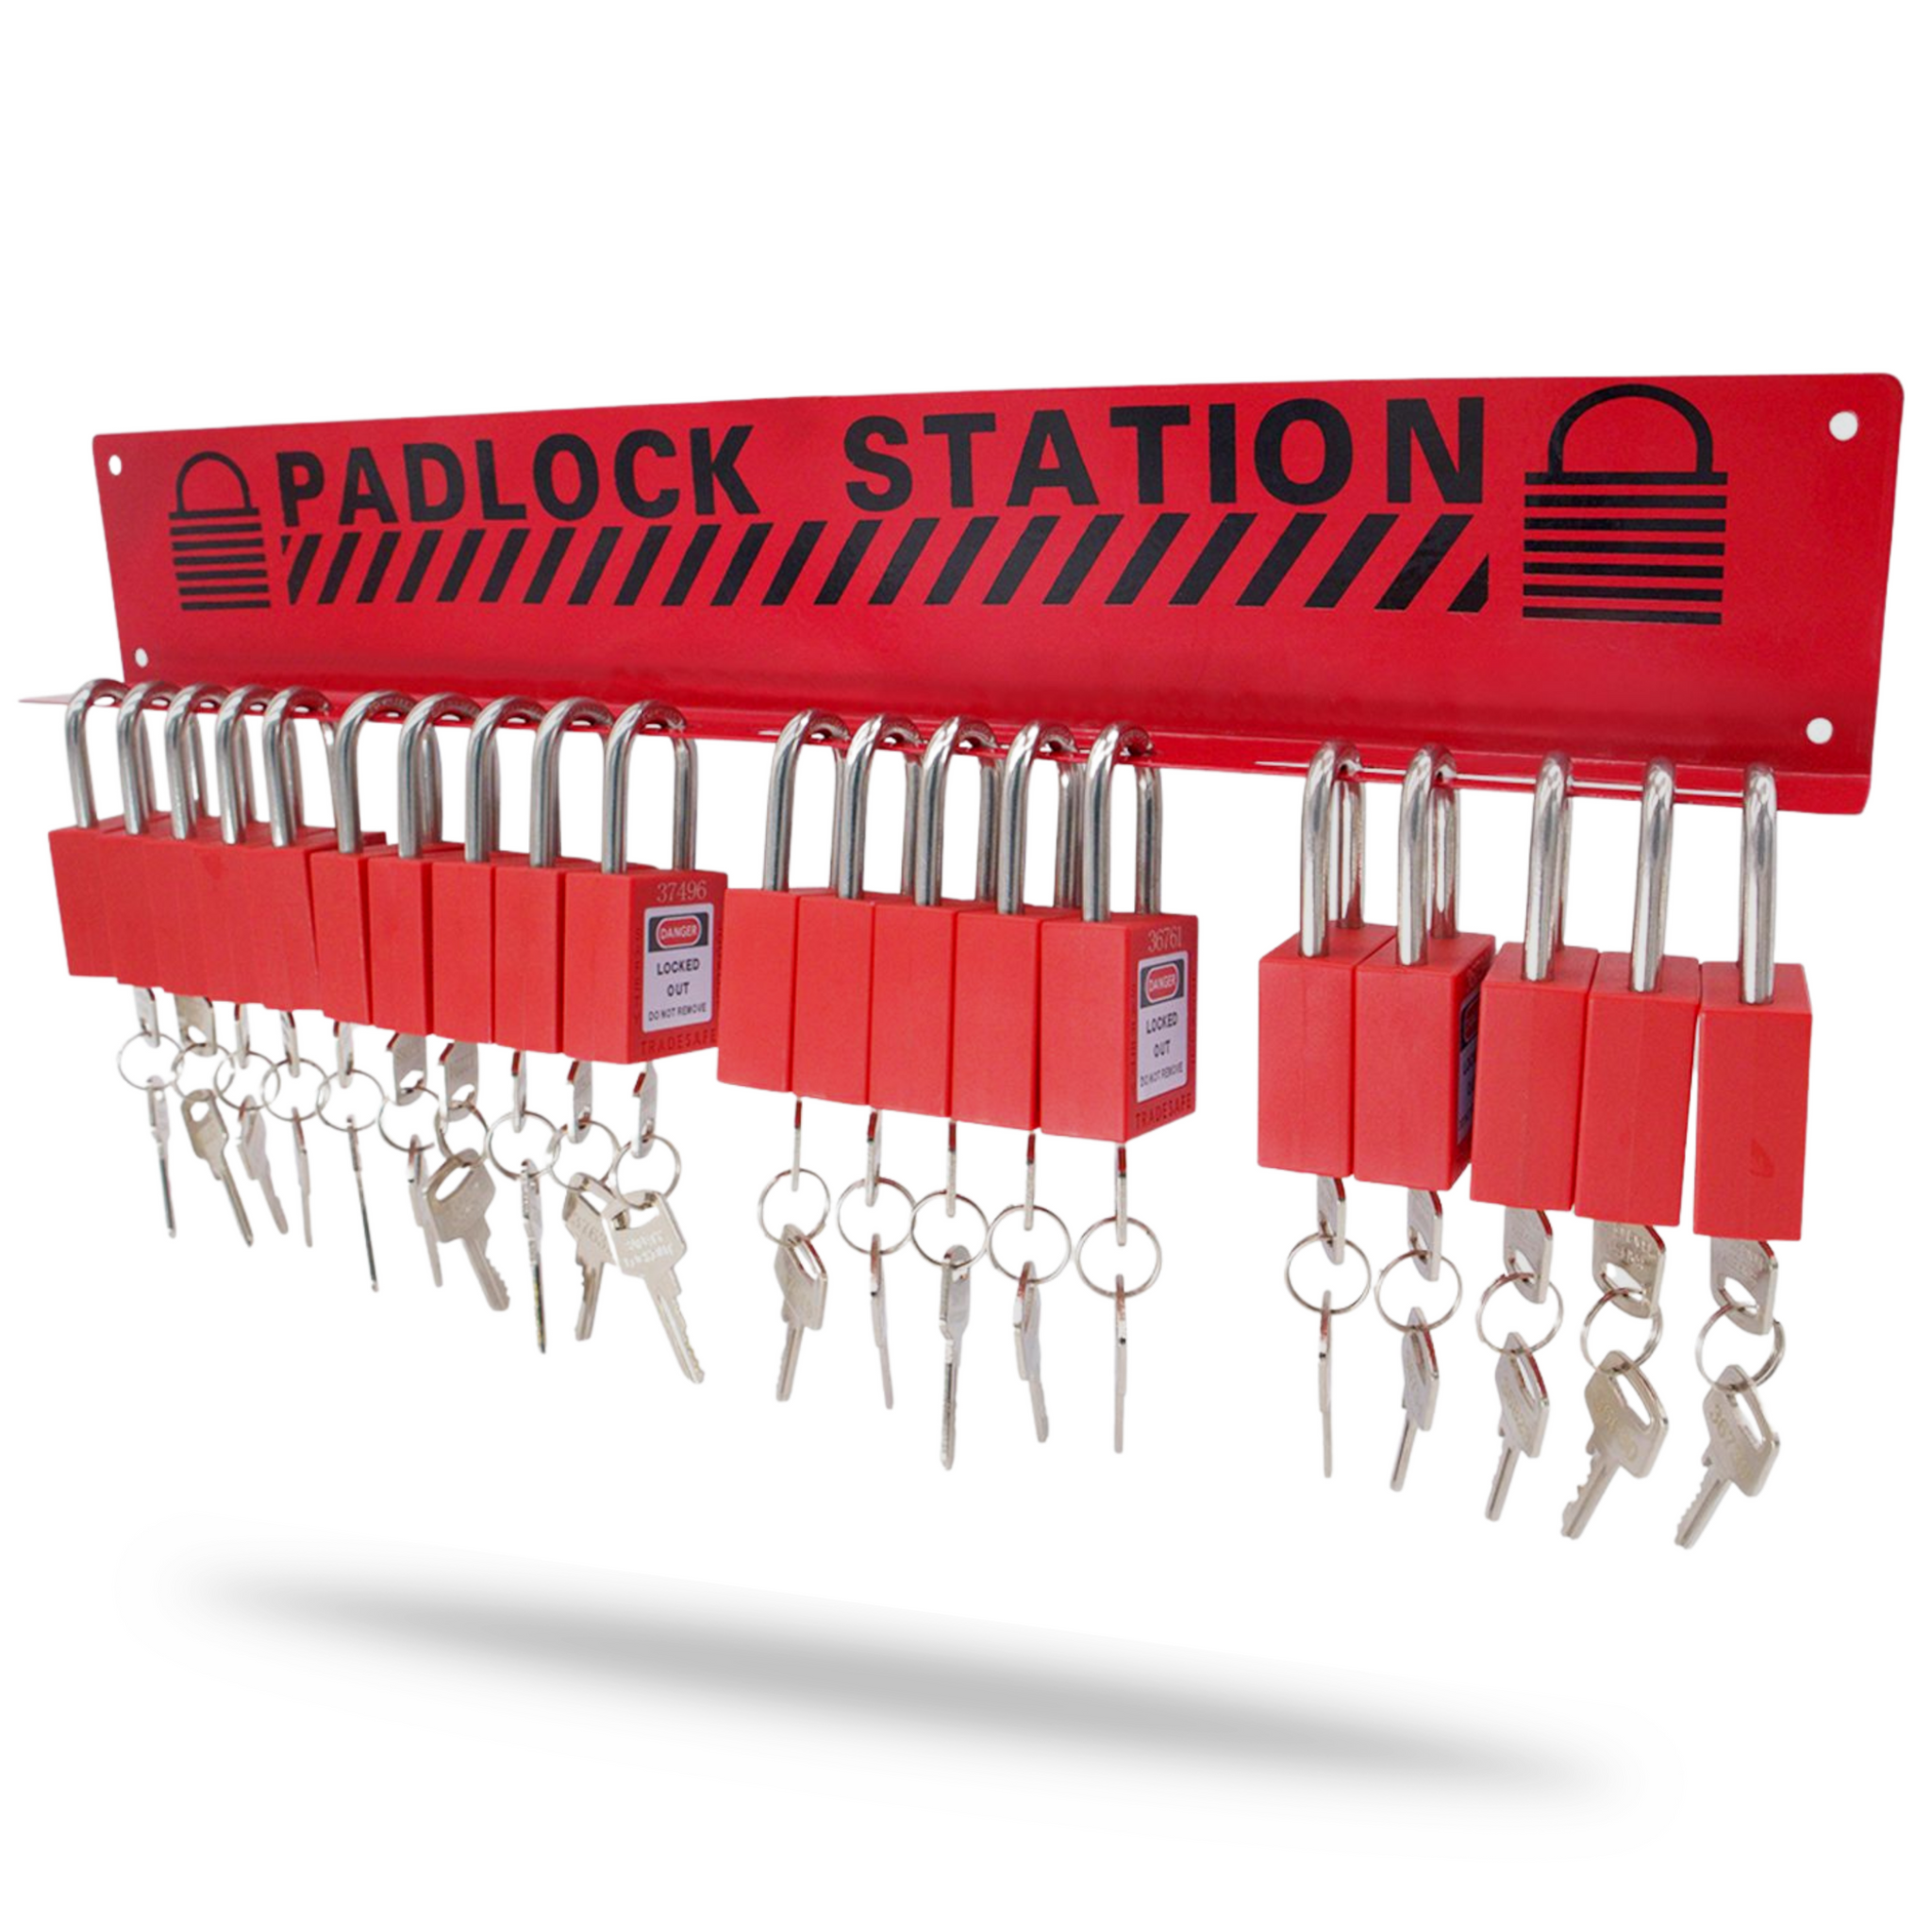 Safety Padlock Lockout Tagout Station - Fits 20 Padlocks – LOTO Locks Included